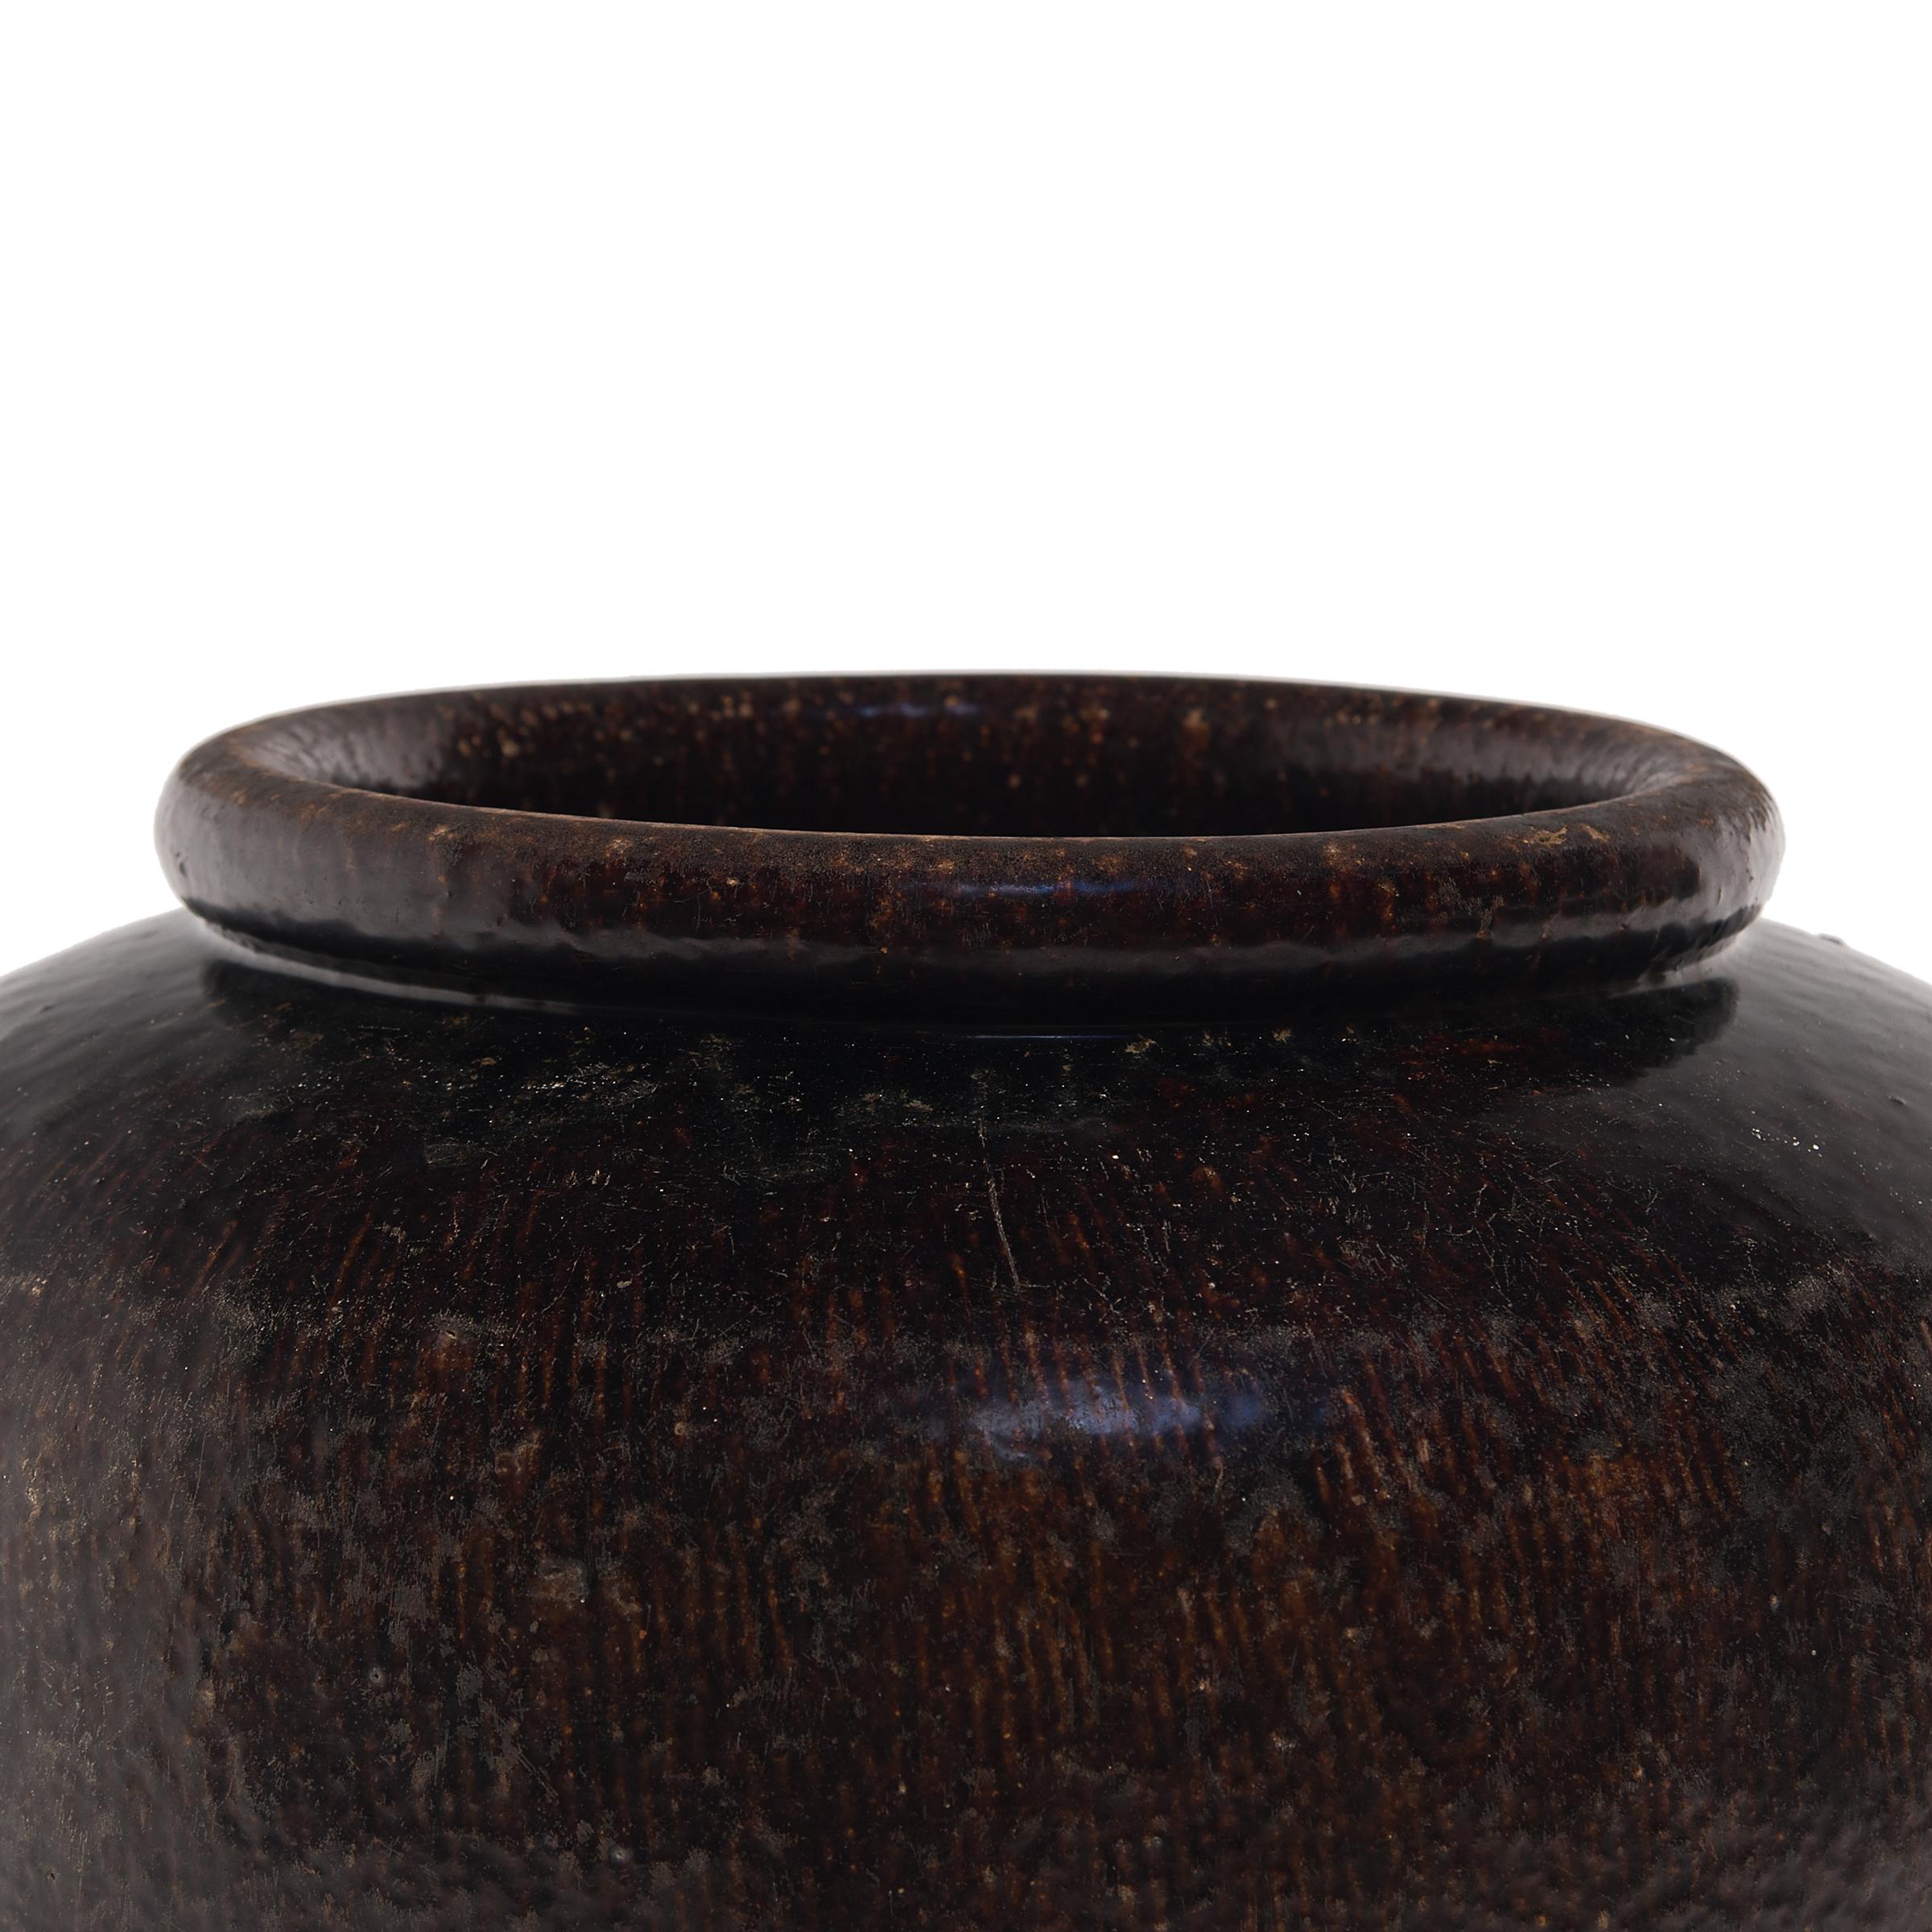 Ceramic Chinese Dark Glazed Pickling Pot, circa 1900